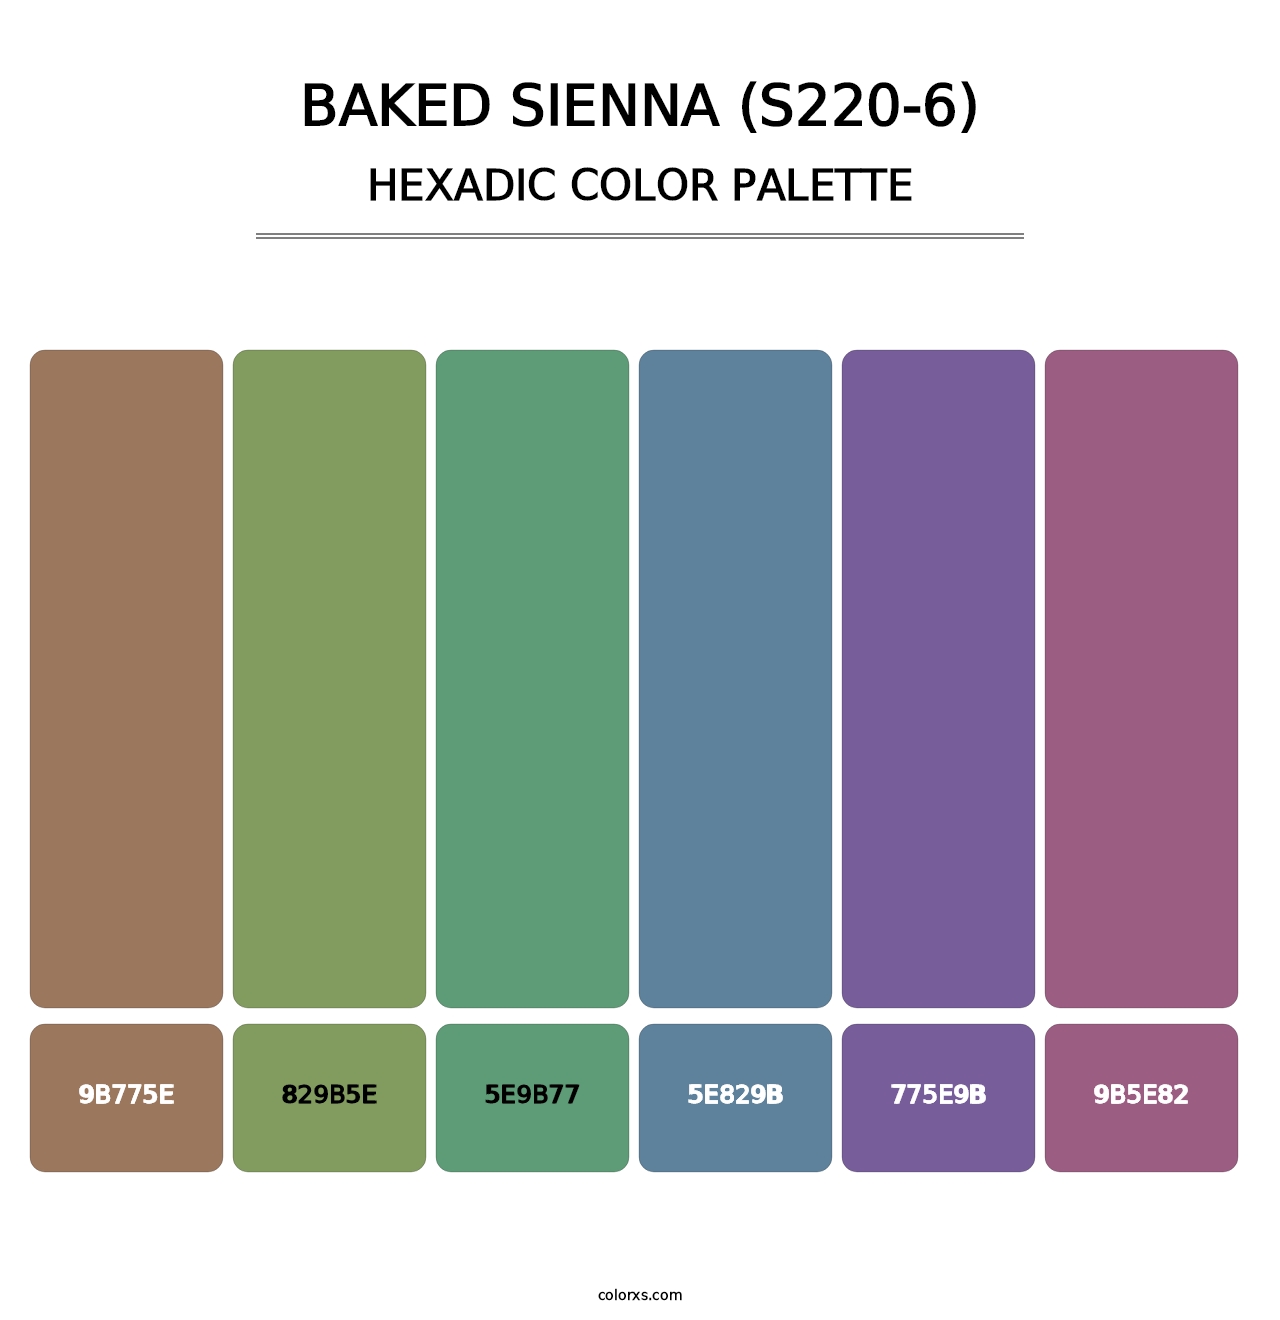 Baked Sienna (S220-6) - Hexadic Color Palette